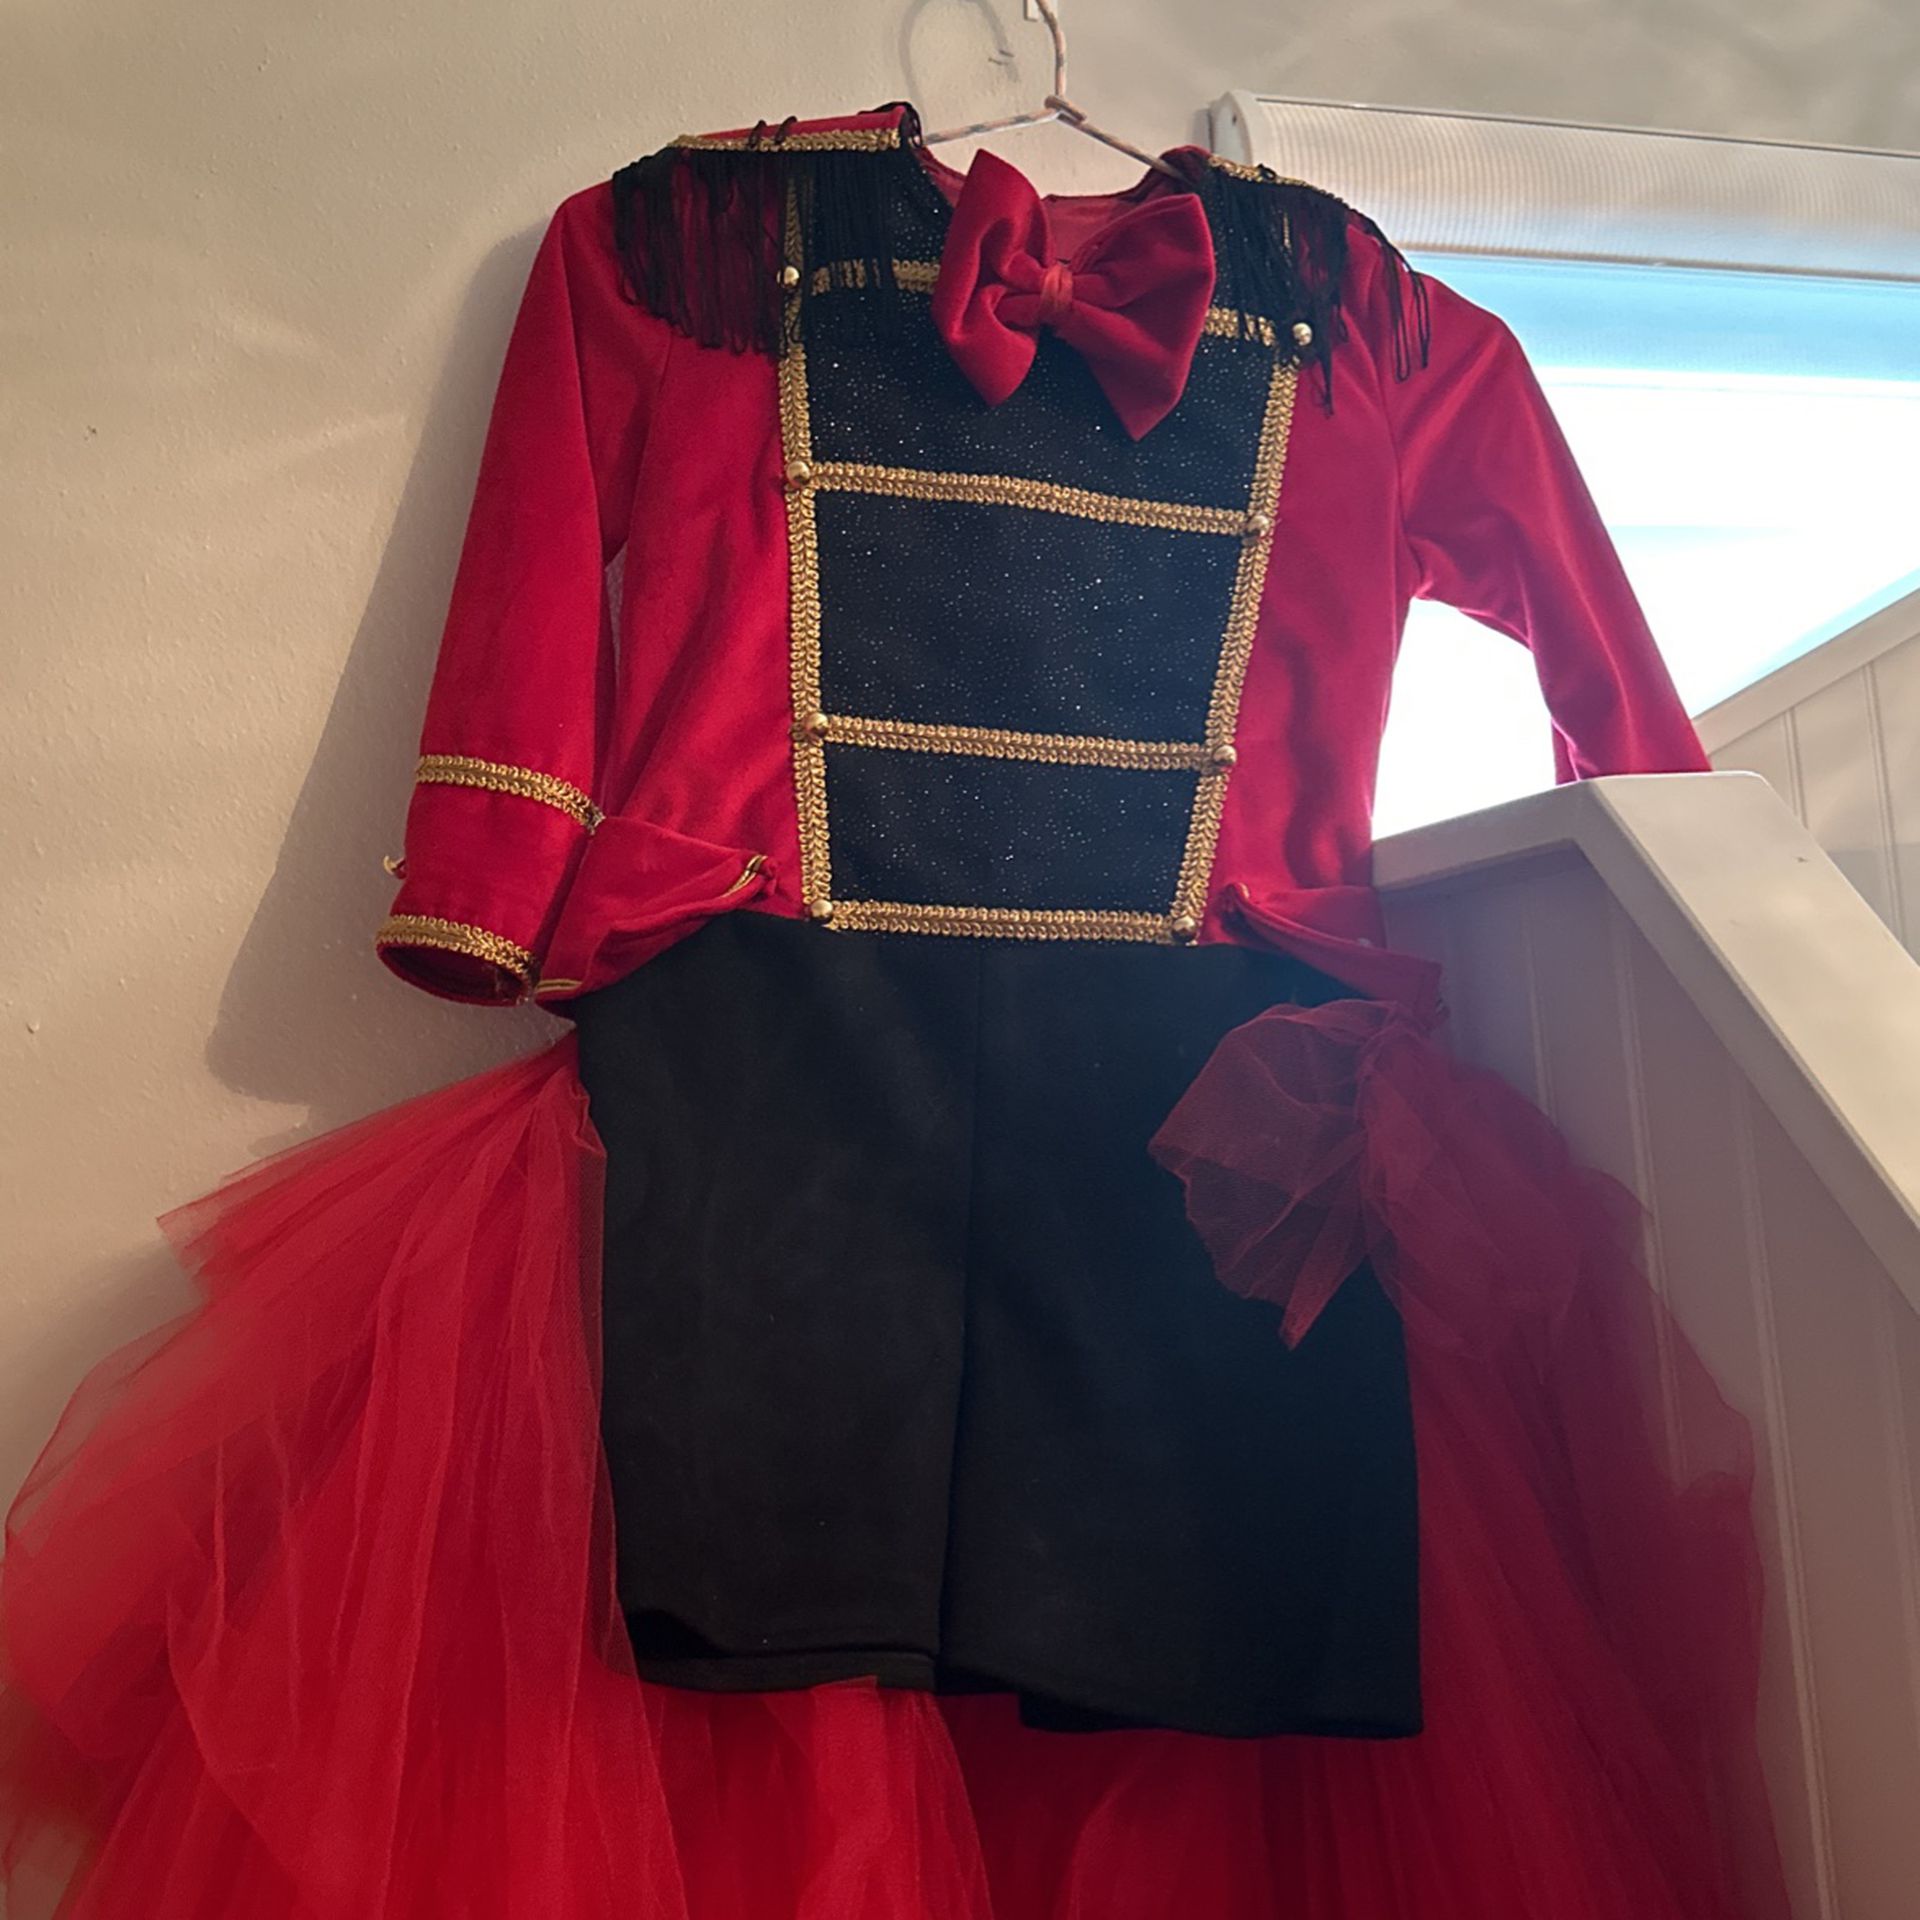 Girl nutcracker costume,girl circus outfit,soldier dress,tutu circus dress,showoman